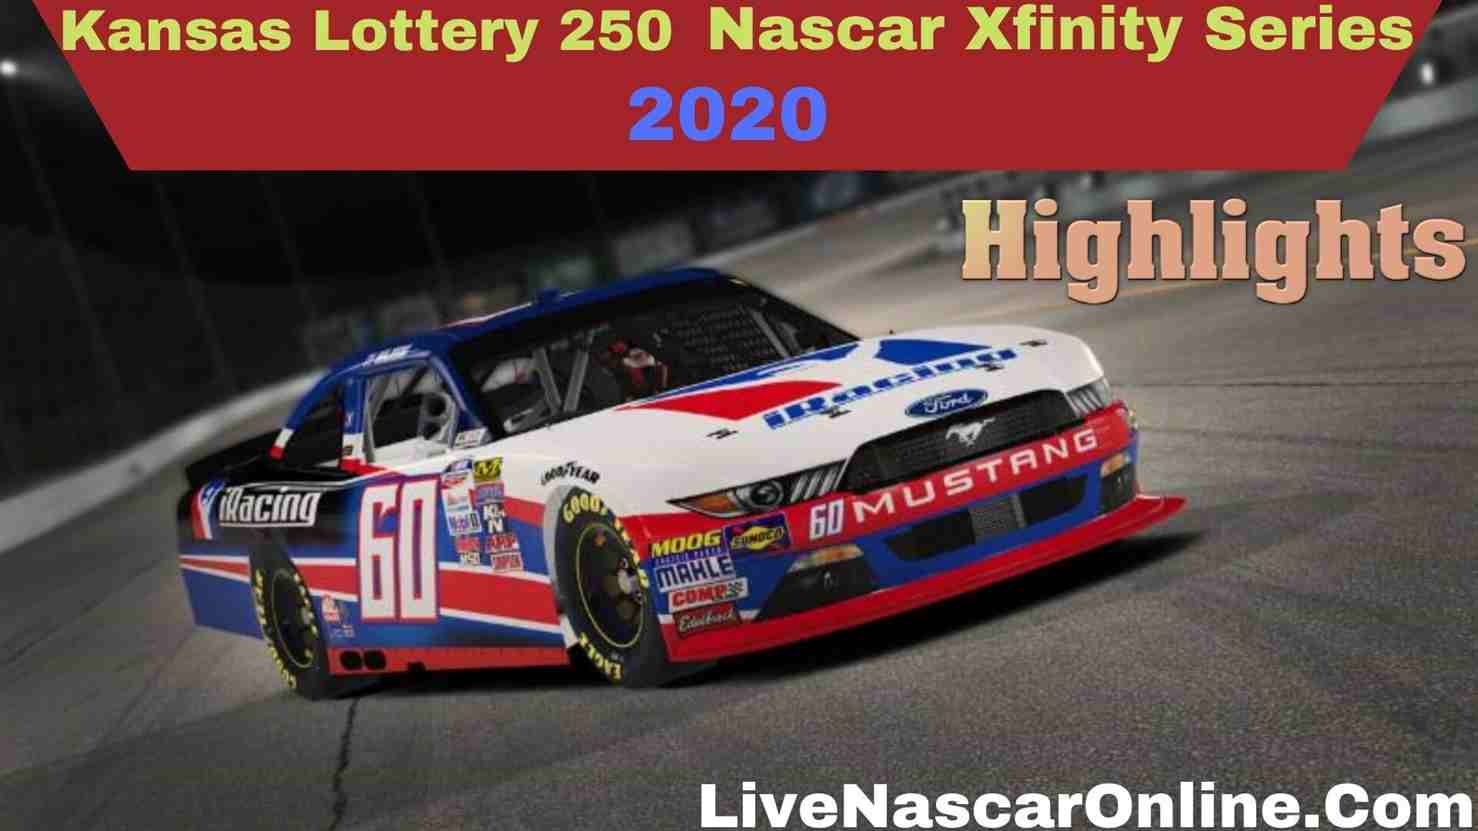 Kansas Lottery 250 Nascar Xfinity Series Highlights 2020